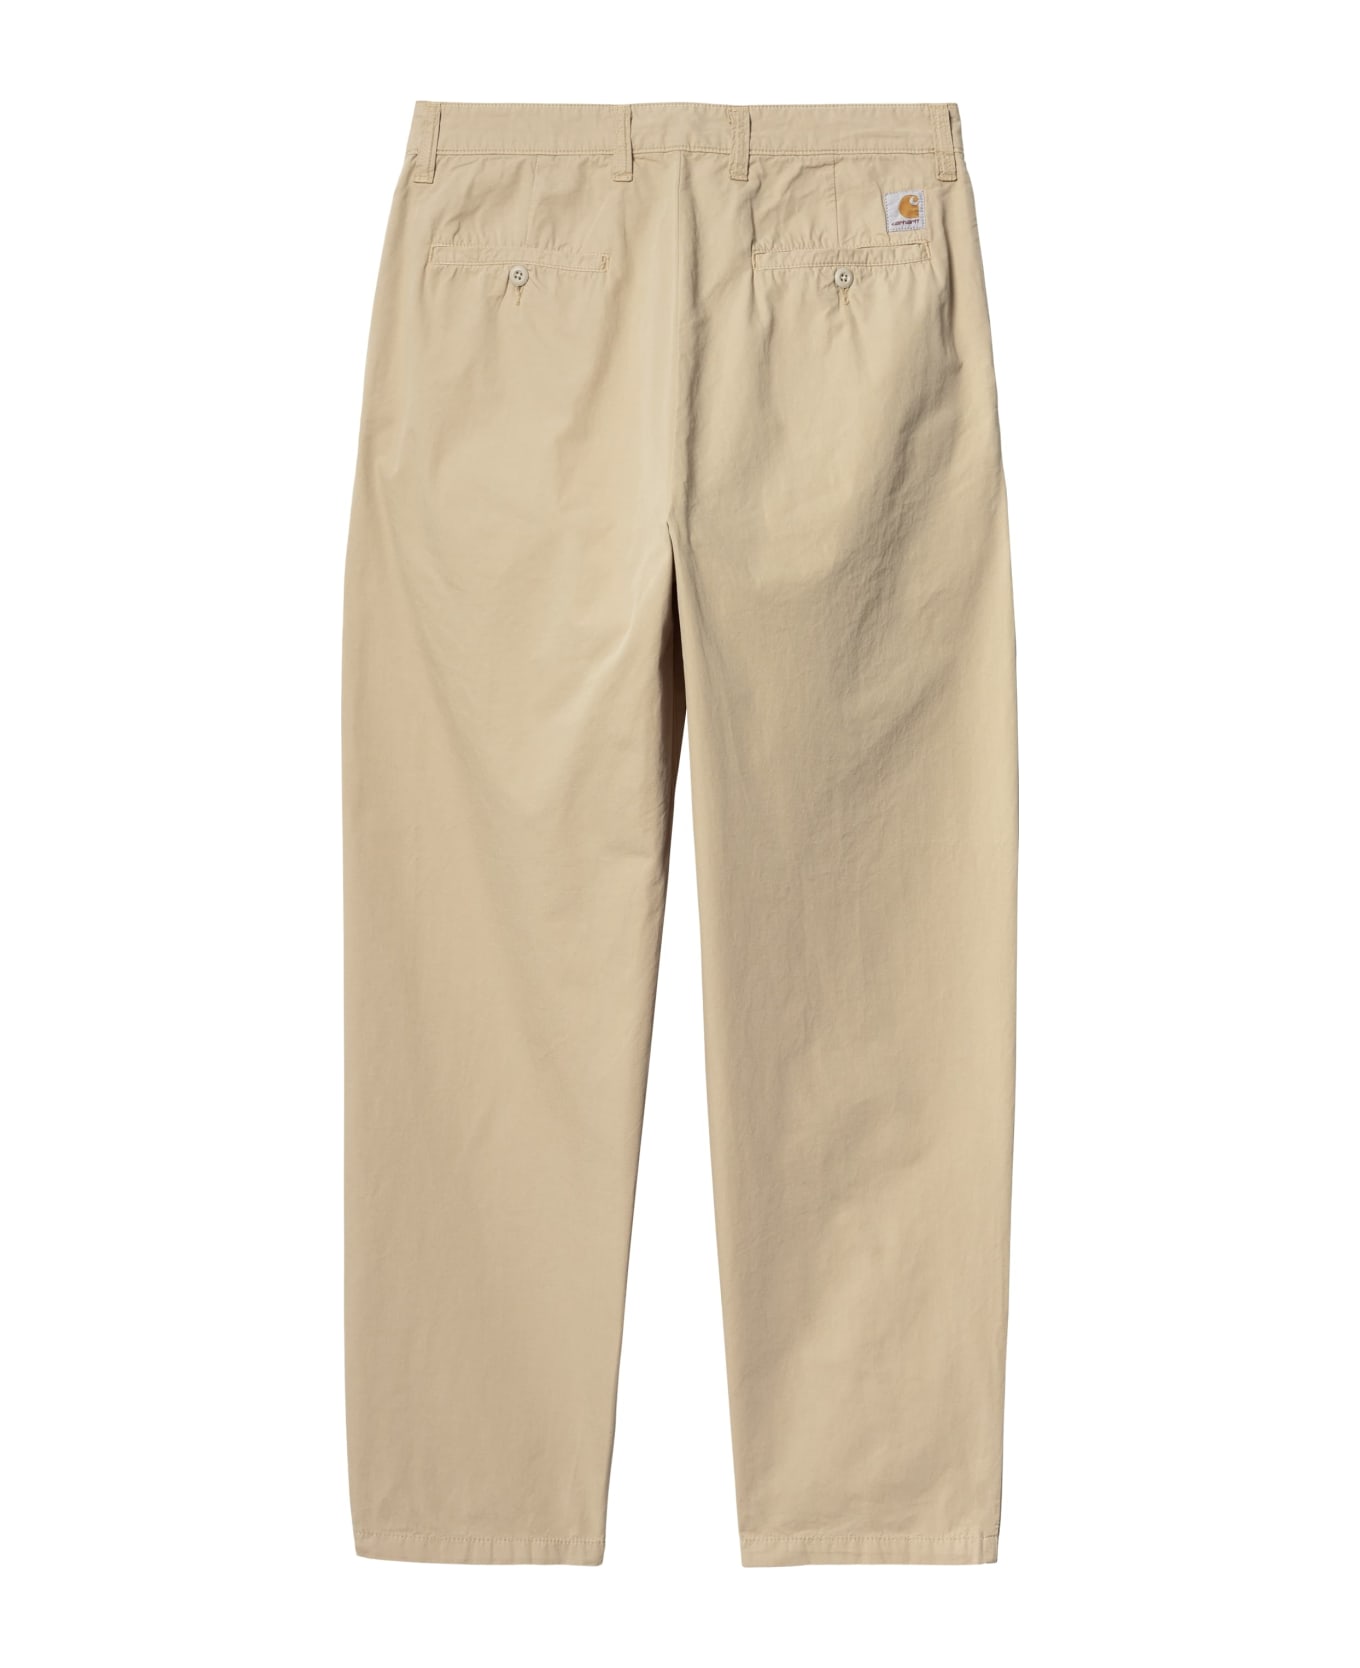 Carhartt Cotton Gabardine Pants - Beige